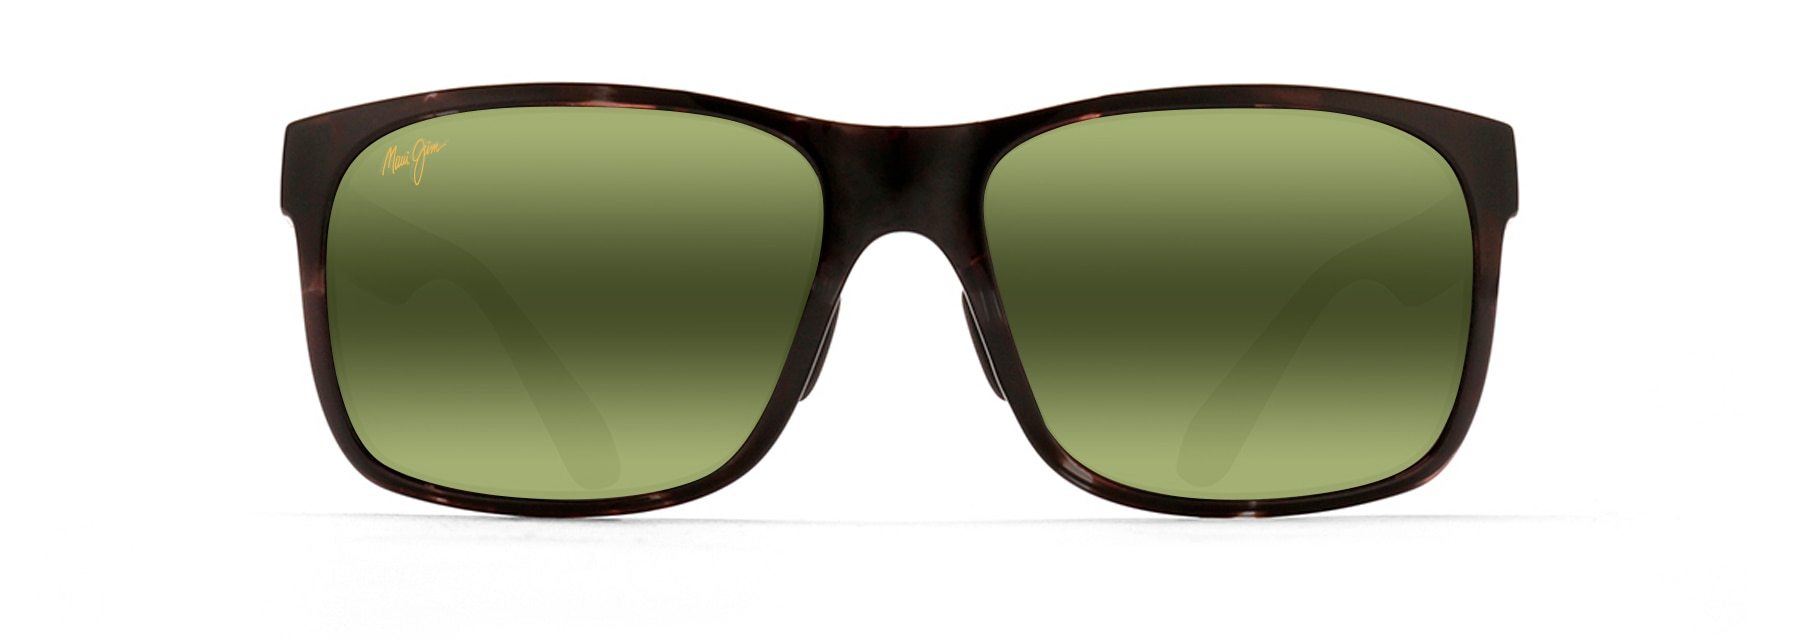 MyMaui Red Sands MM432-013 Sunglasses